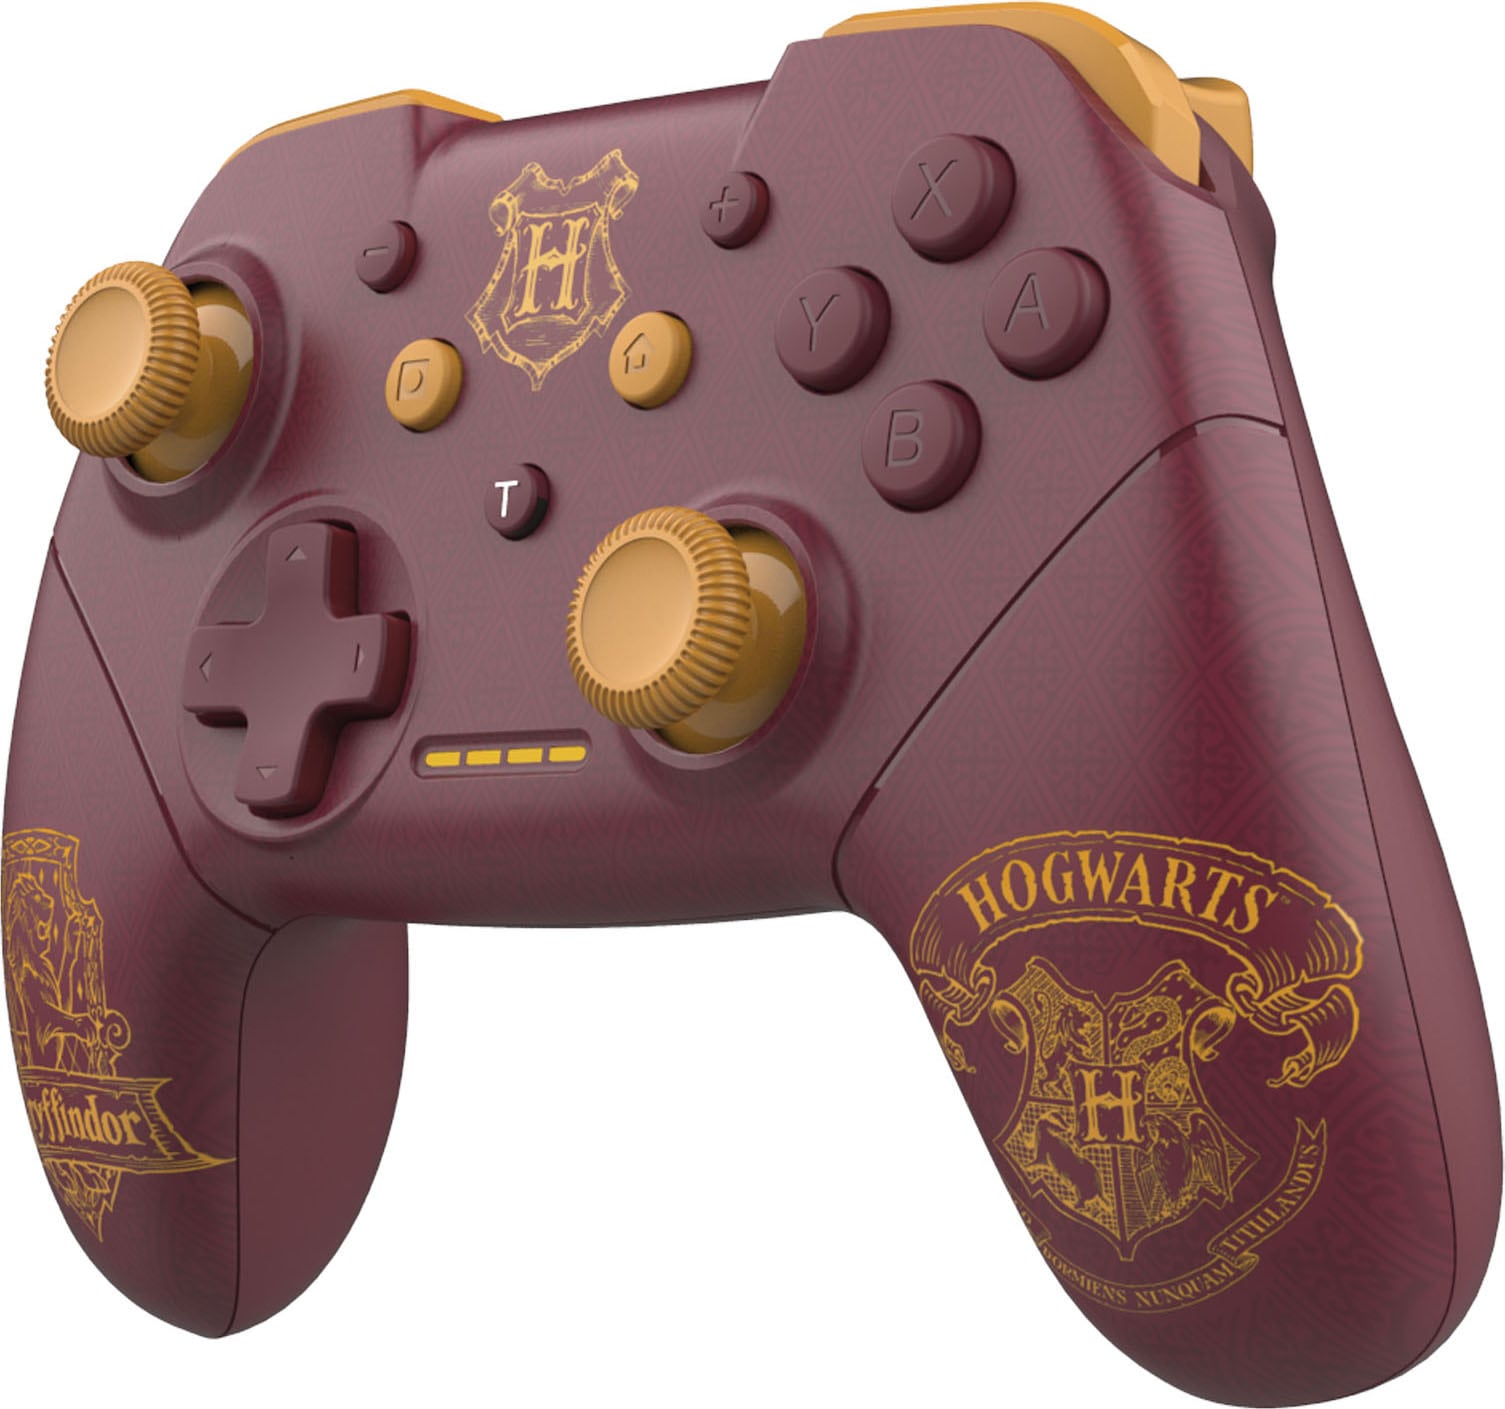 Freaks and Geeks Nintendo-Controller jetzt Gryffindor Wireless« Potter »Harry bei OTTO bestellen